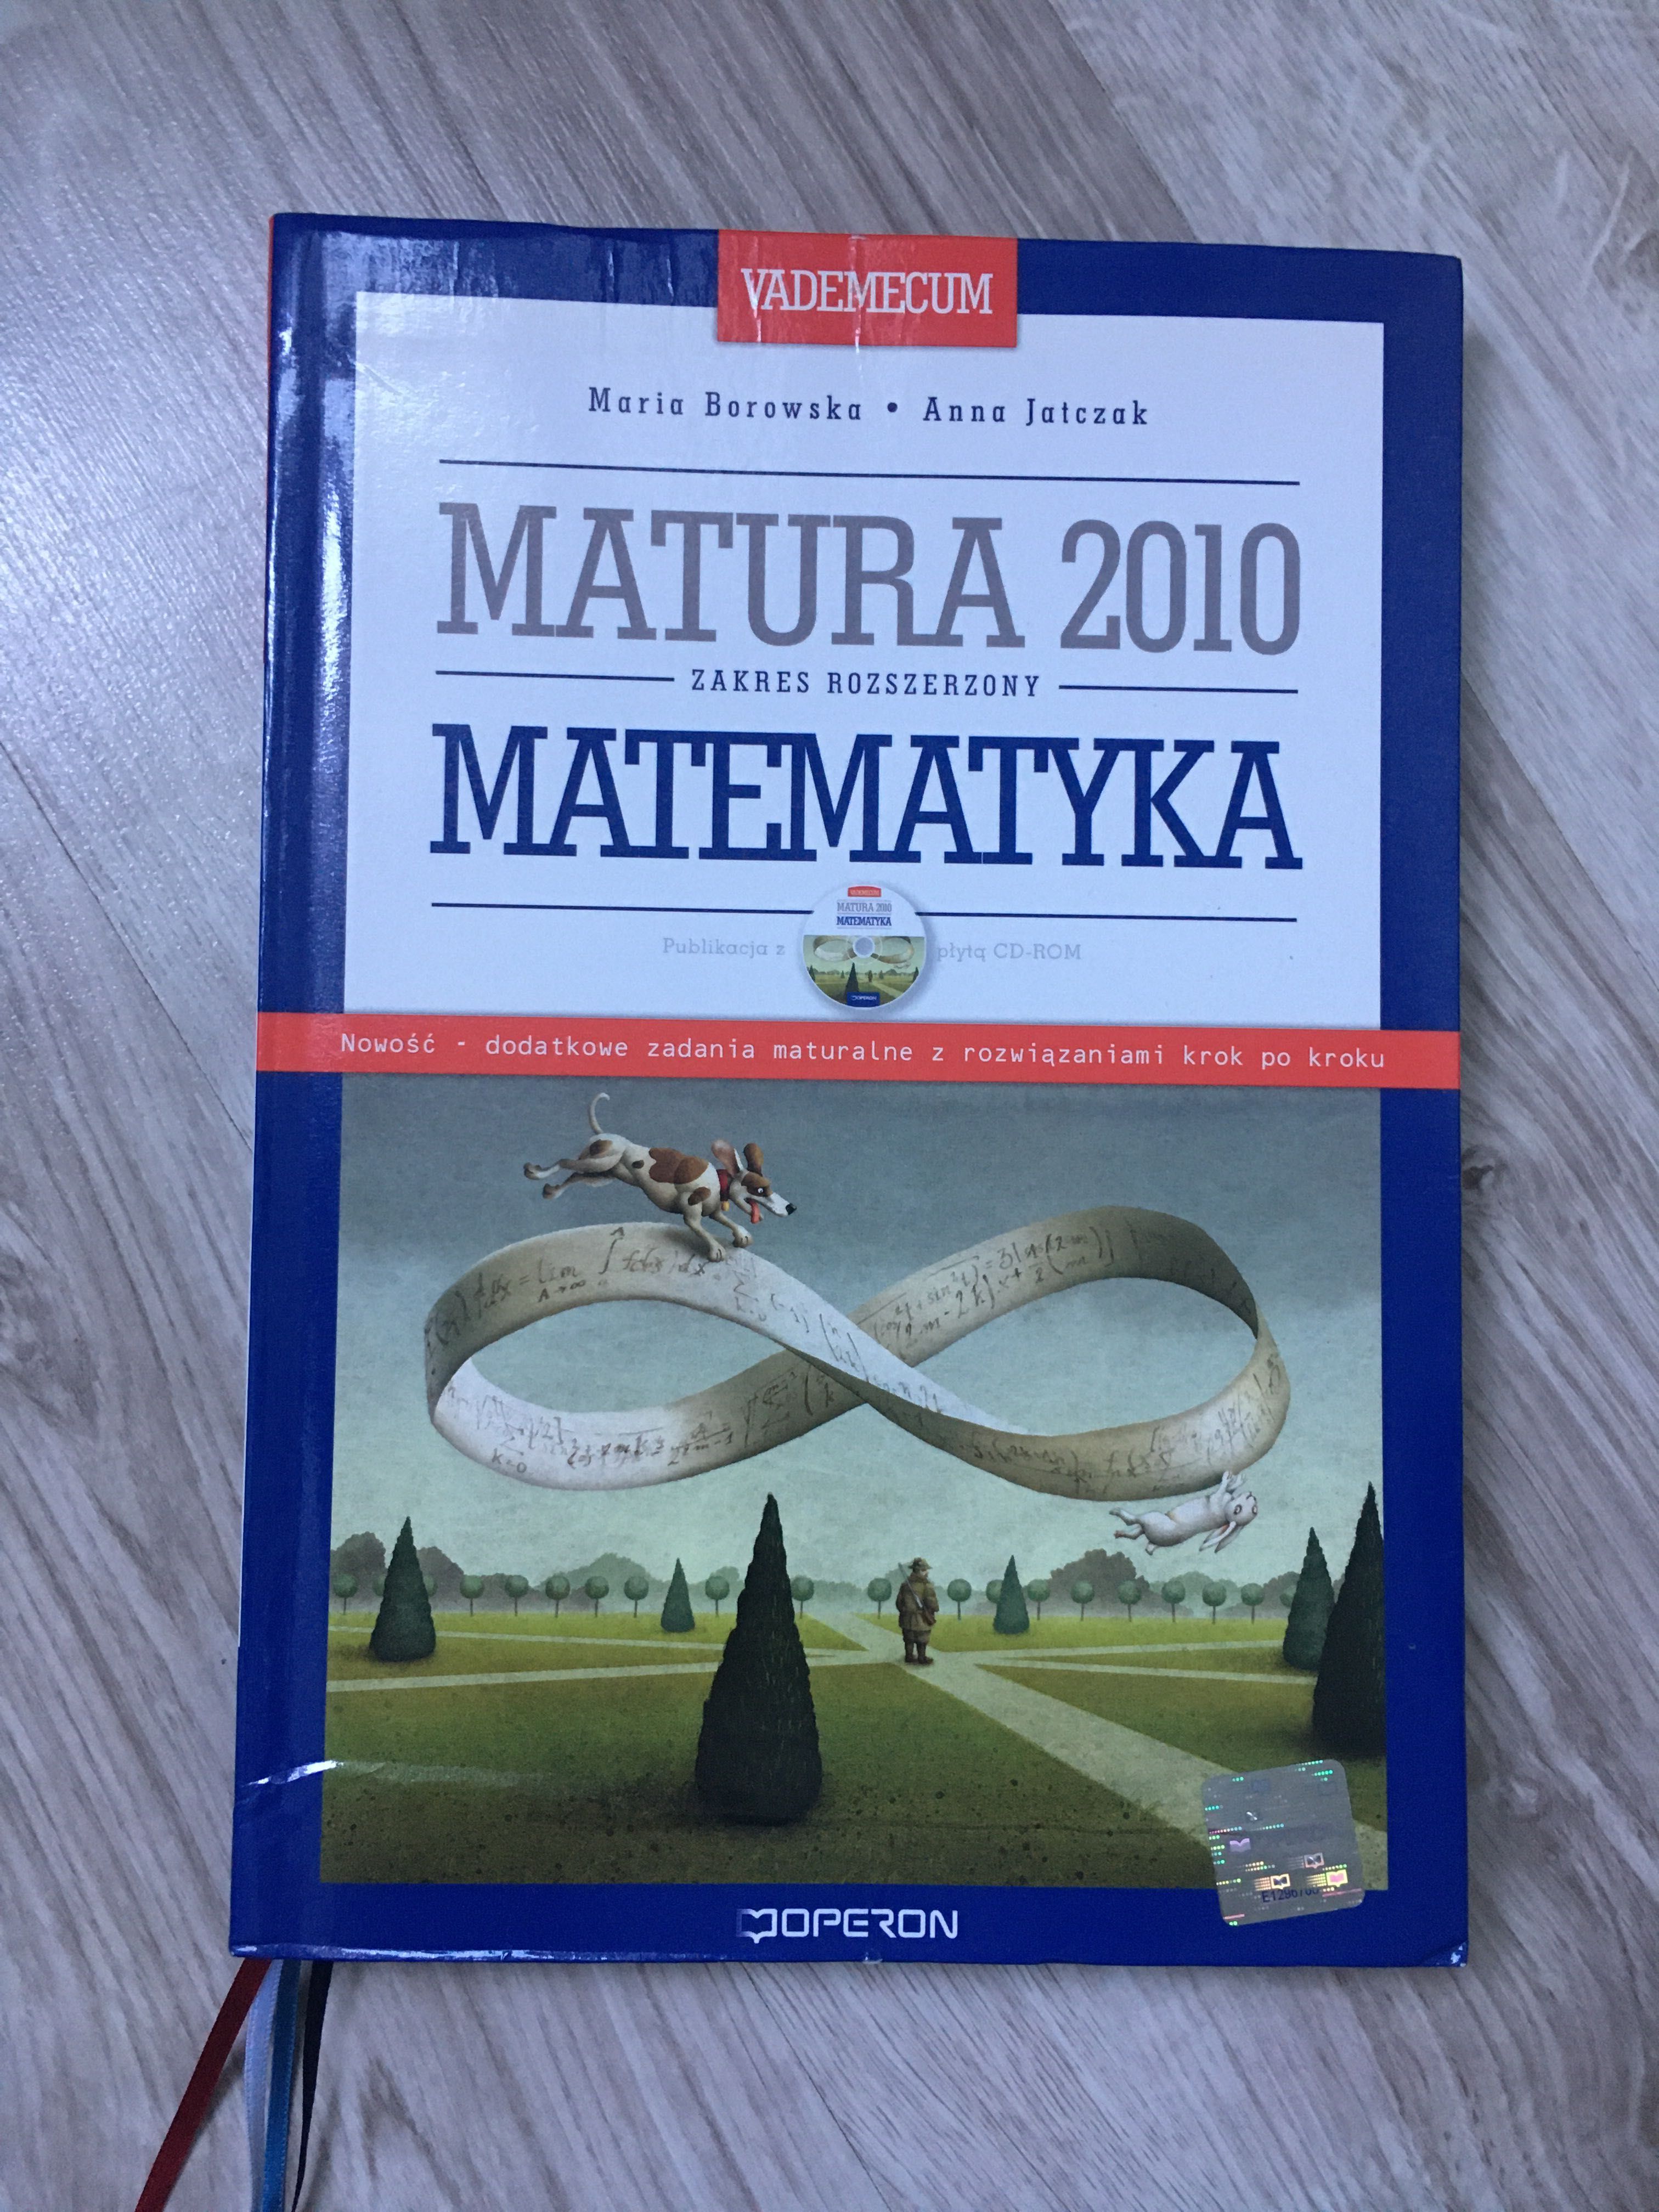 Książka ,,Matura 2010” Matematyka, vademecum. Zakres rozszerzony